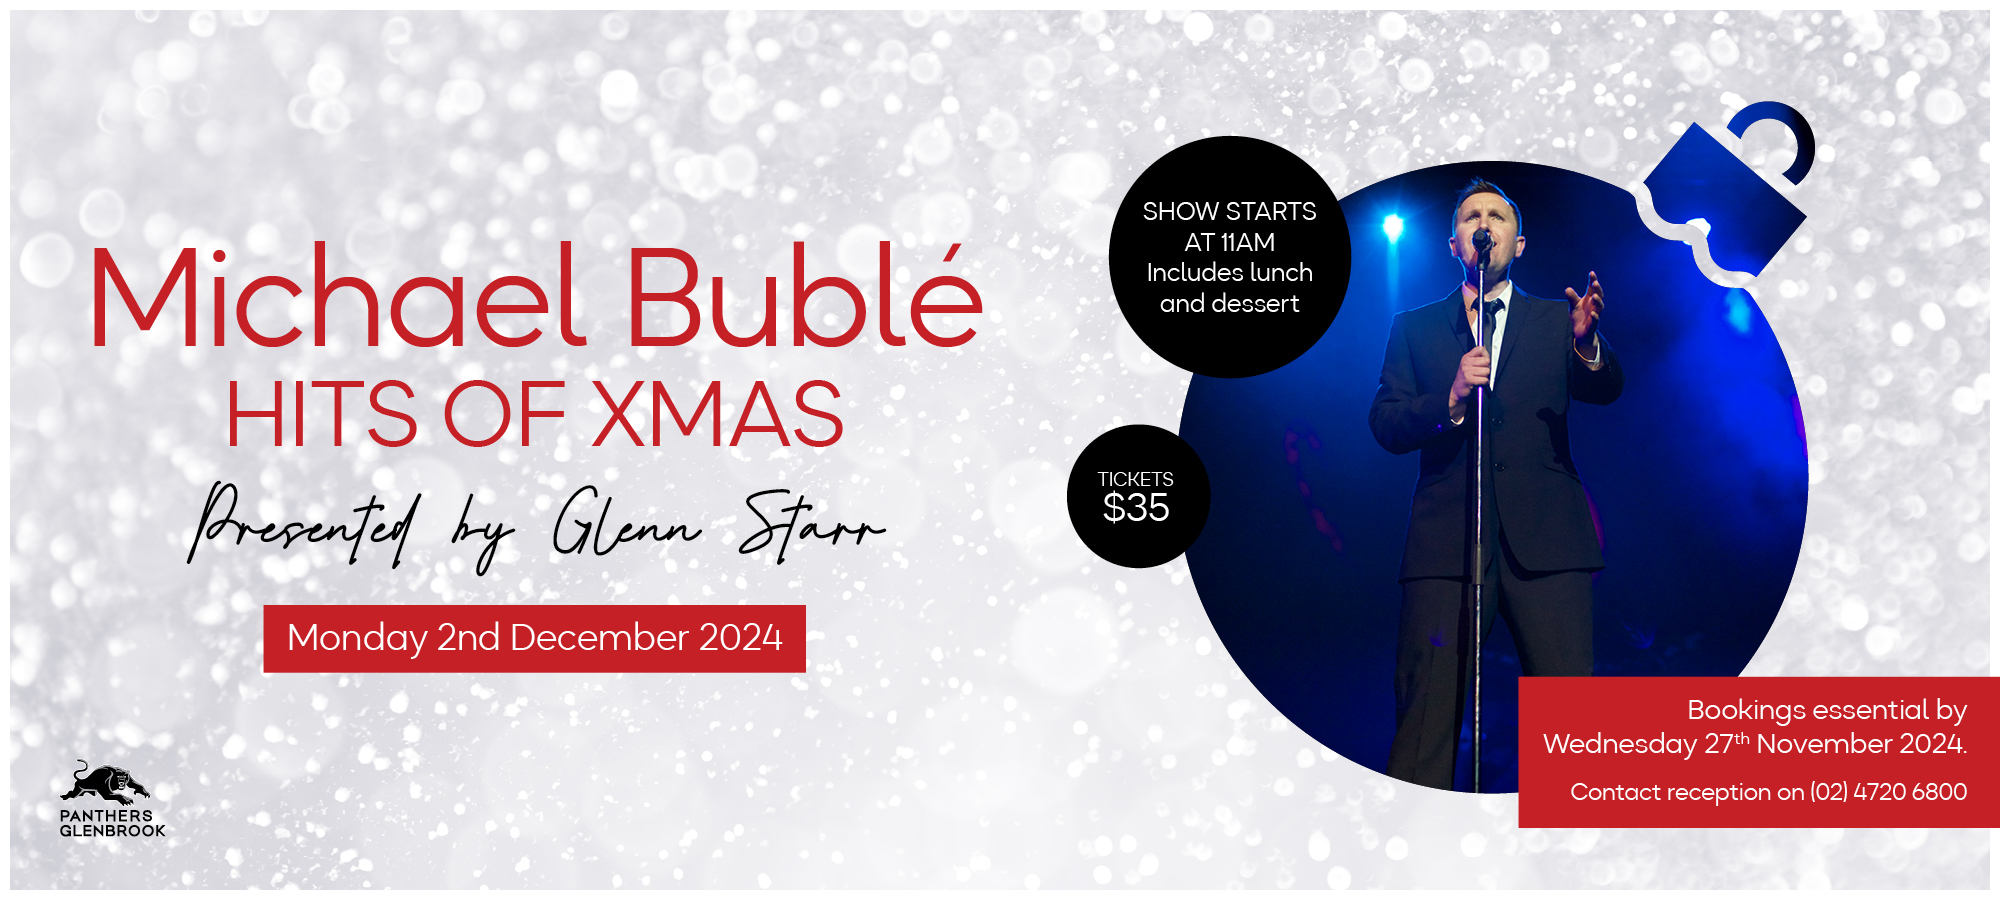 Michael Bublé Hits of Xmas – Presented by Glenn Starr